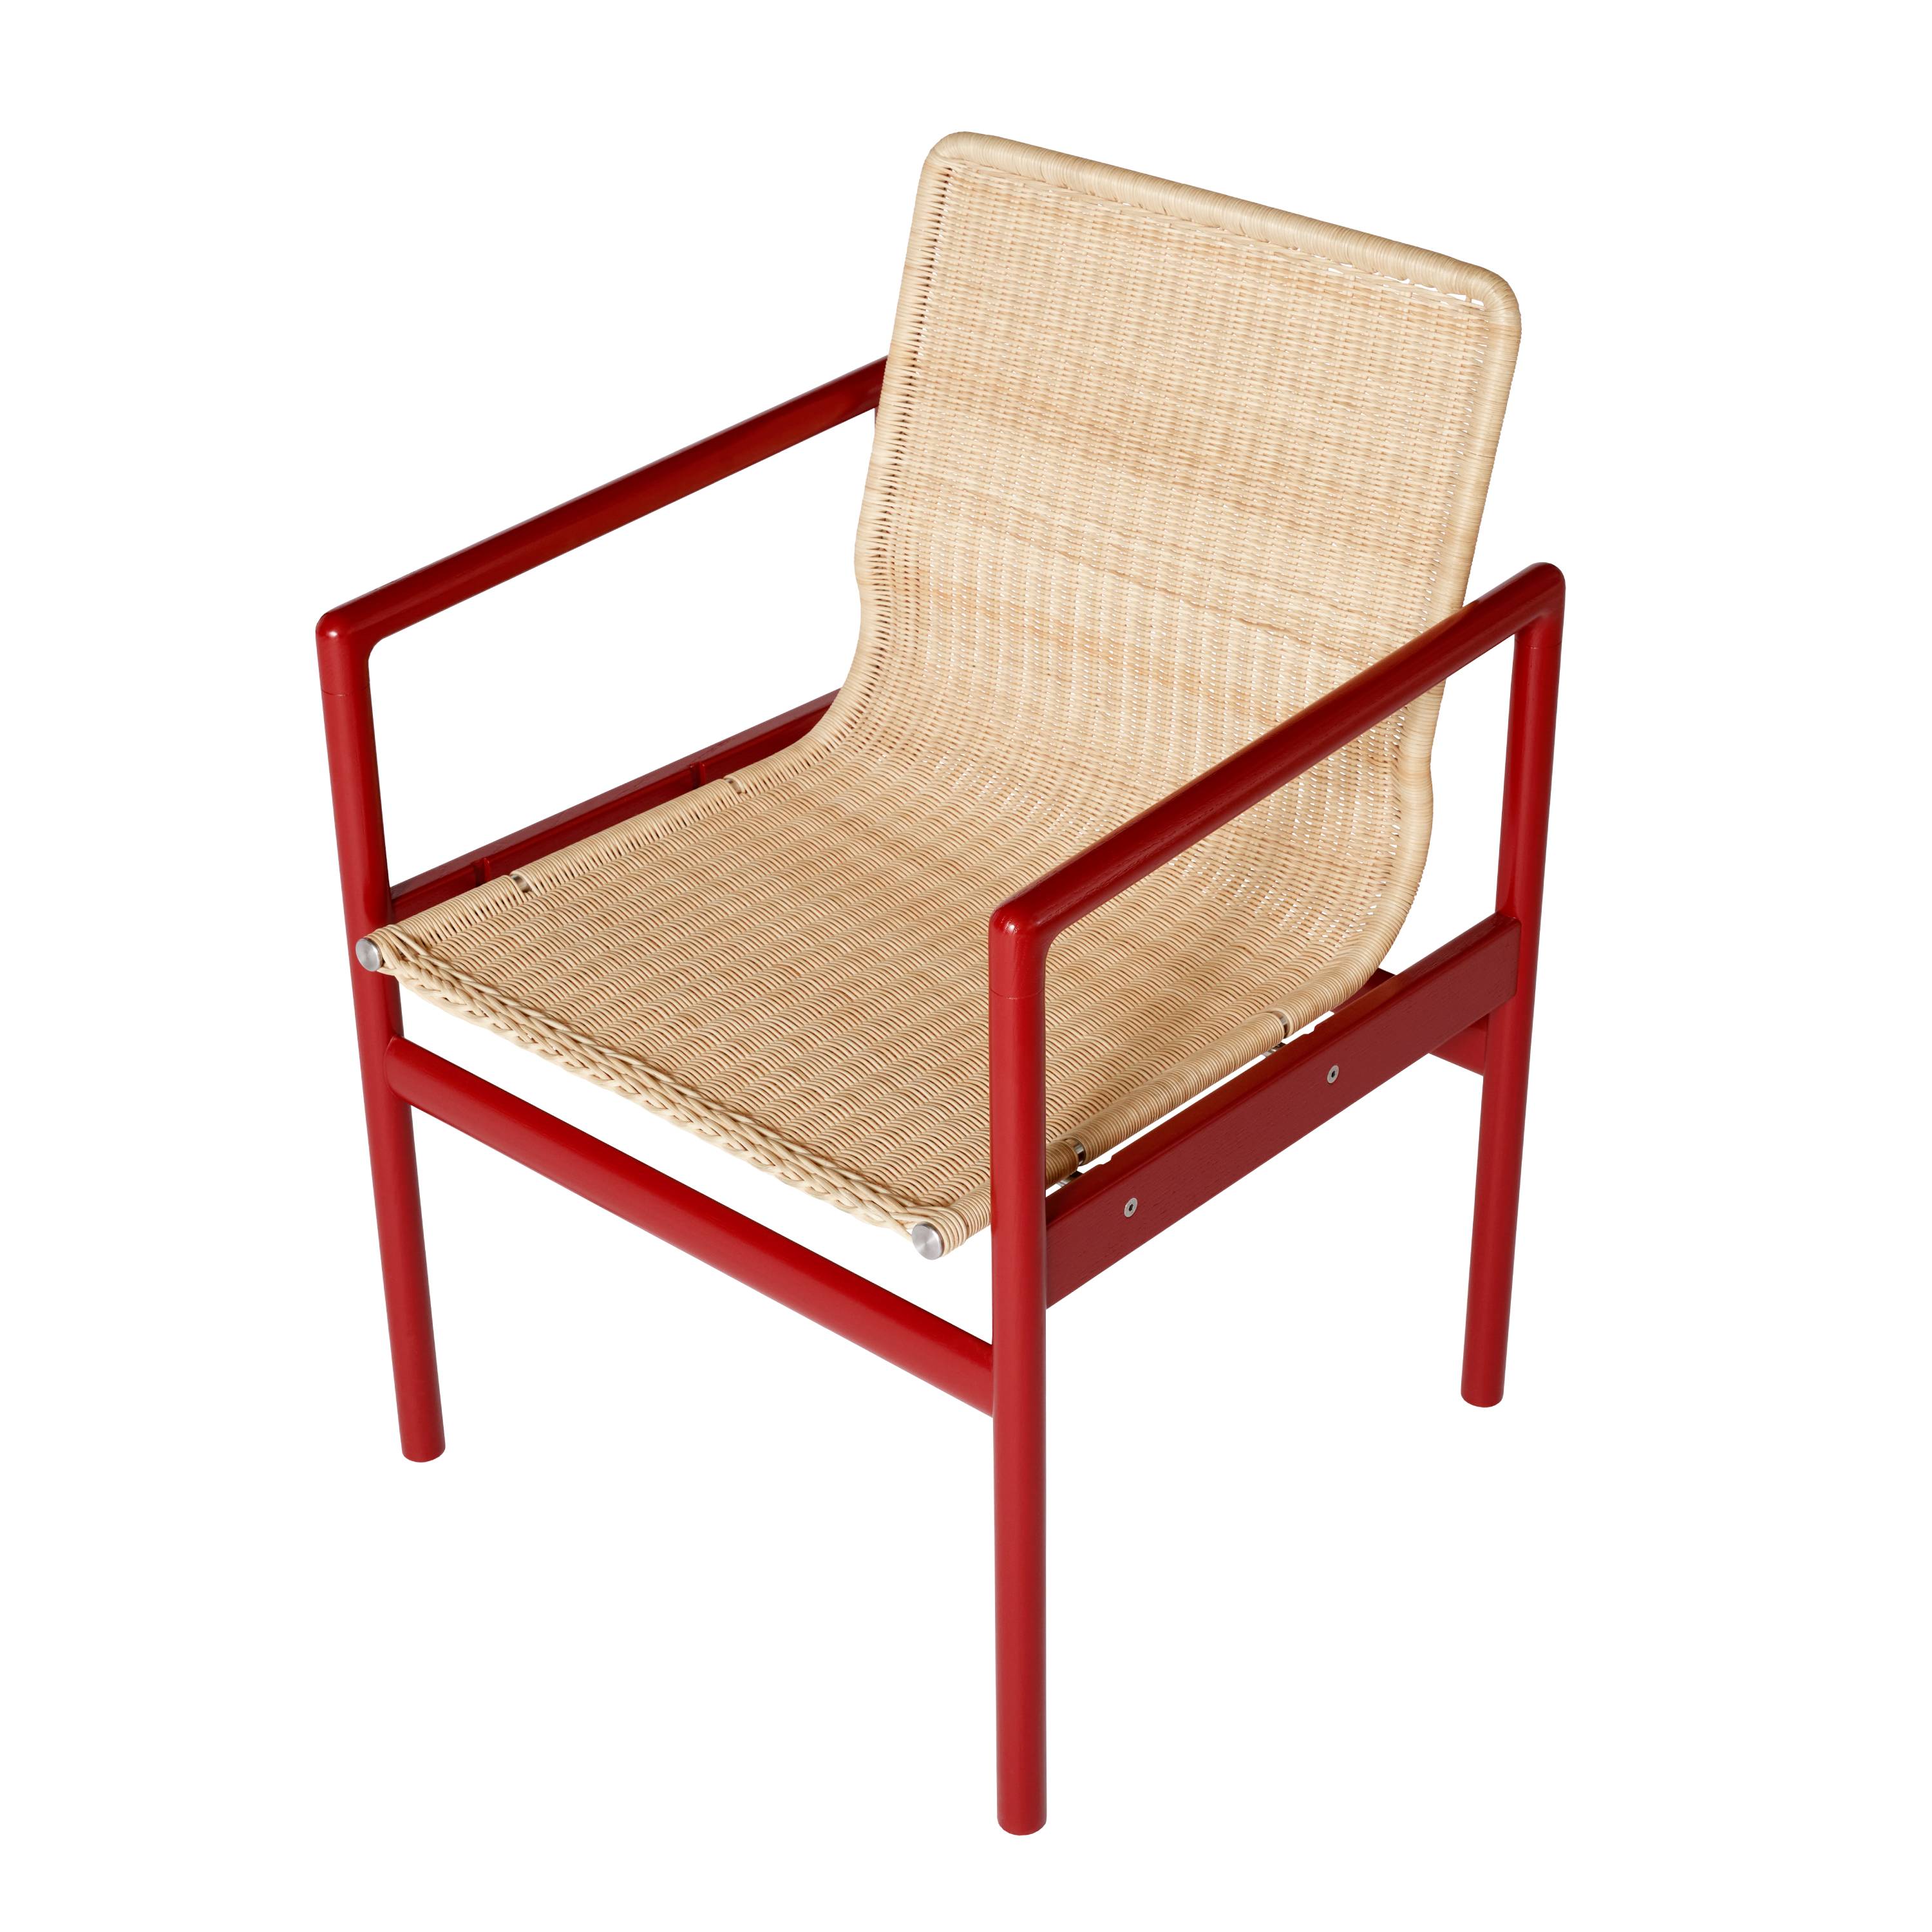 Knud Holscher & Ejnar Pedersen Chair: Red